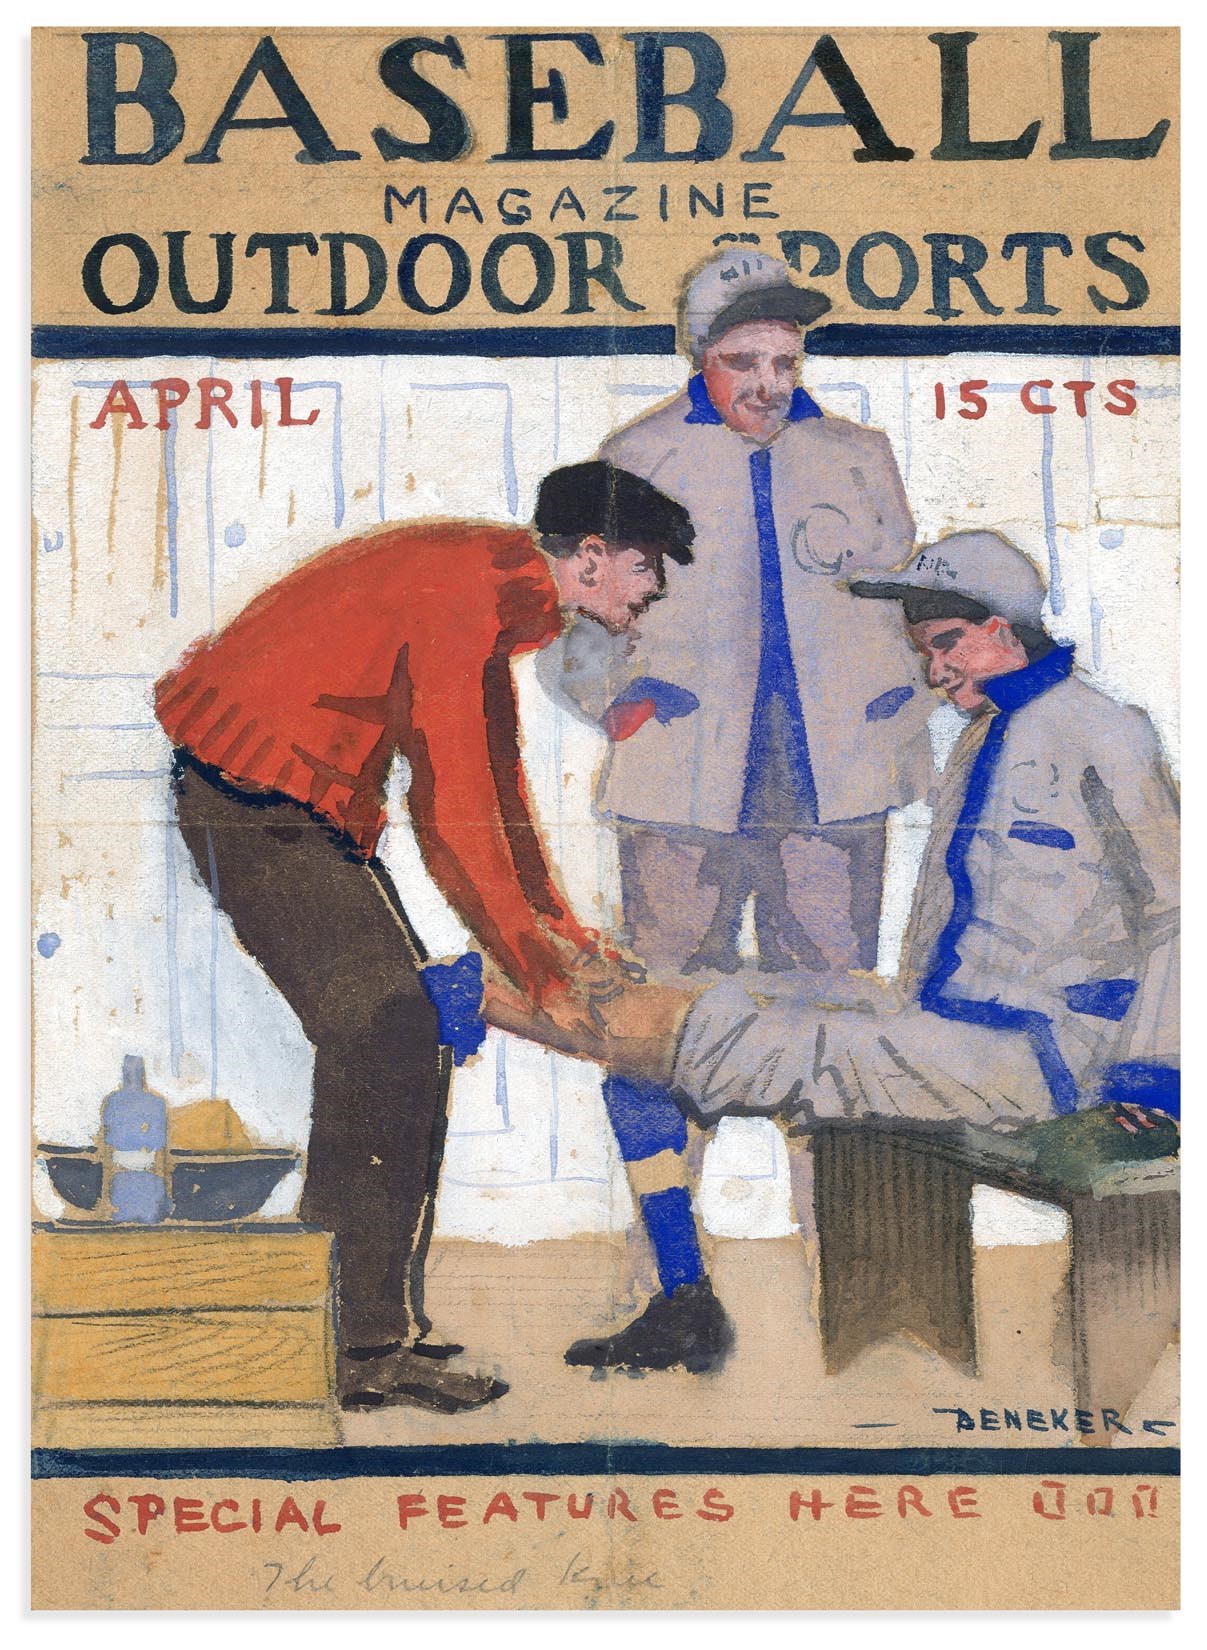 1911 Baseball Magazine "Nap Lajoie" Cover Art Study by Gerrit Beneker (1882-1934)